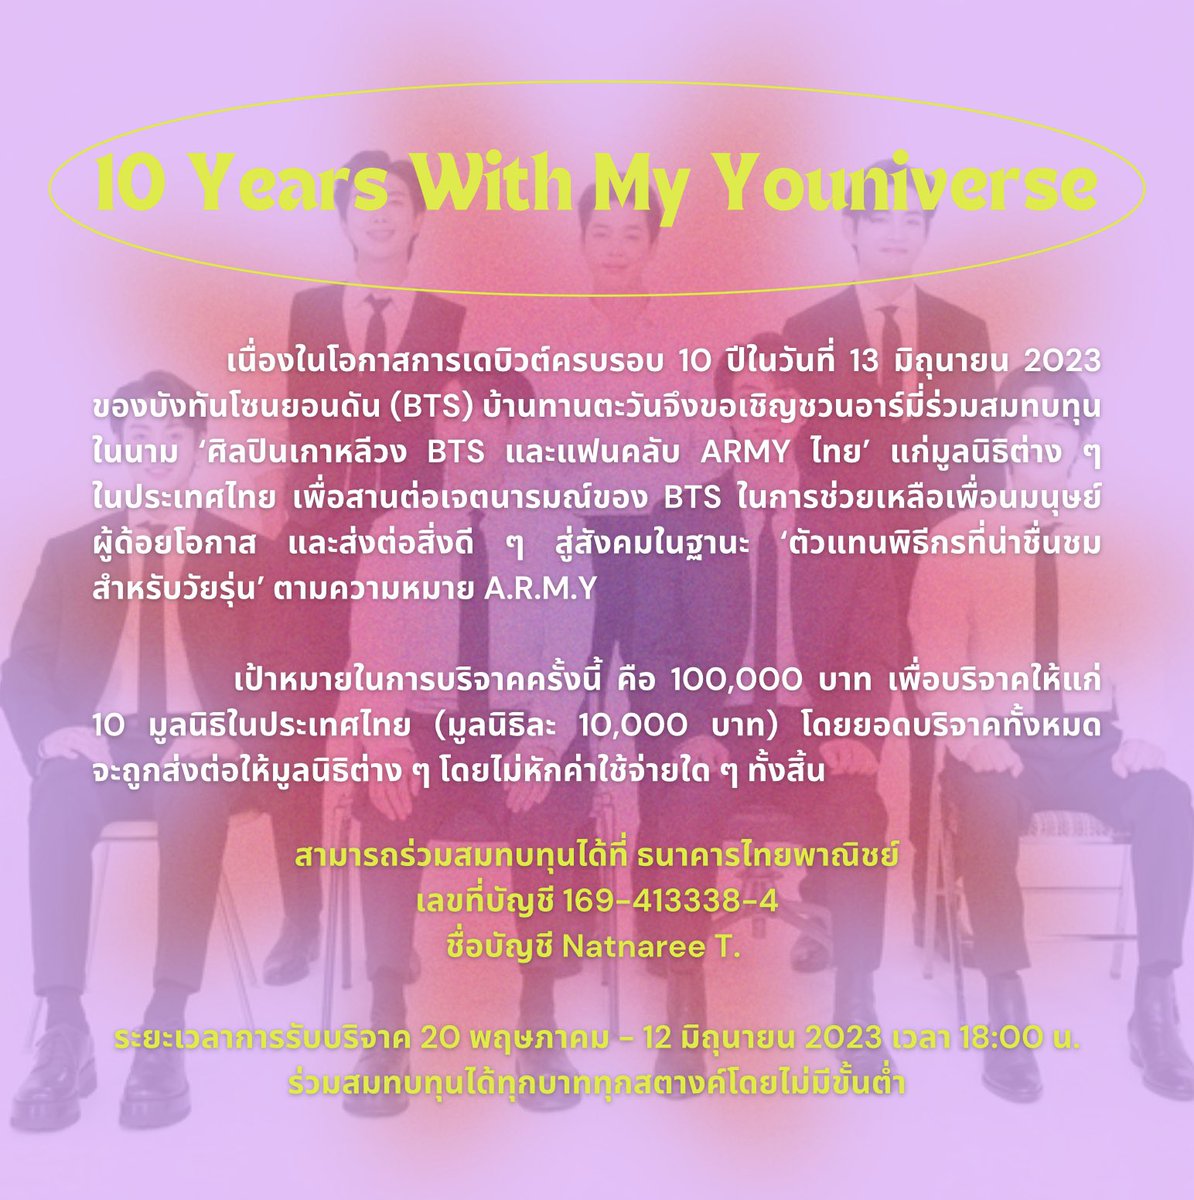 💜 10 Years With My Youniverse | sunflowercharts’ Project 2023 🌻

โปรเจกต์บริจาคเนื่องในโอกาสการเดบิวต์ครบรอบ 10 ปี ในวันที่ 13 มิ.ย. 2023 ของ BTS

• แจ้งโอน: forms.gle/DX7pYiwxnkuzDU…
• ตรวจสอบรายชื่อ: bit.ly/TH10YrsBTS

ร่วมกิจกรรมพร้อมติดแฮชแท็ก #10YearsWithMyYouniverse